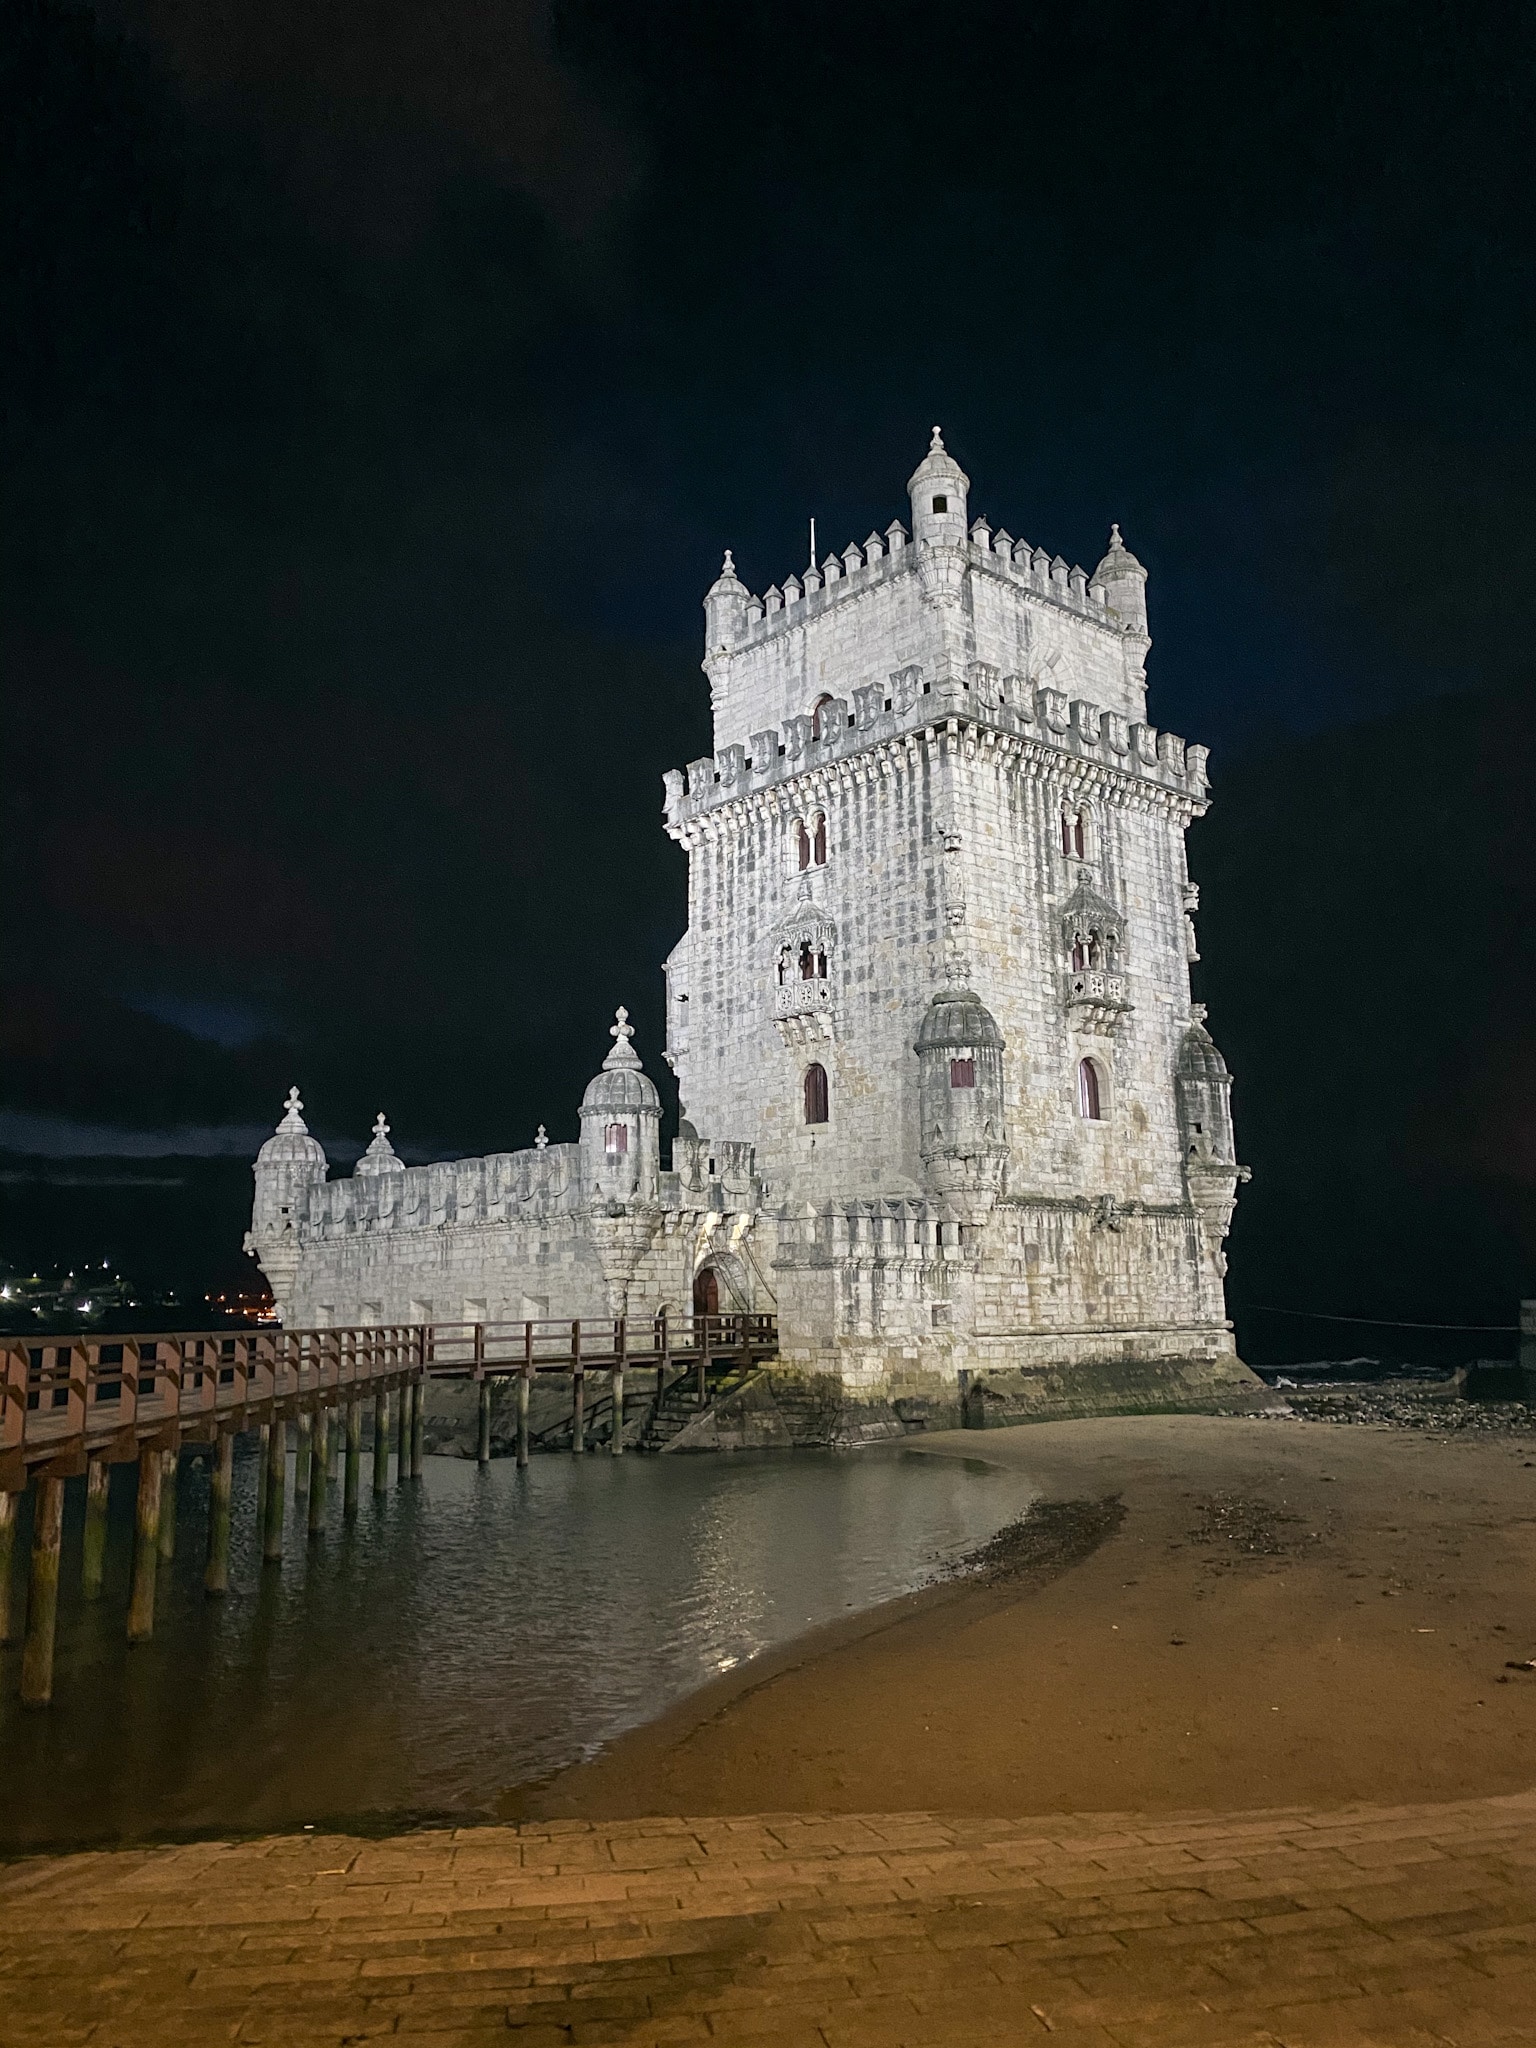 Tower of Belém at night.